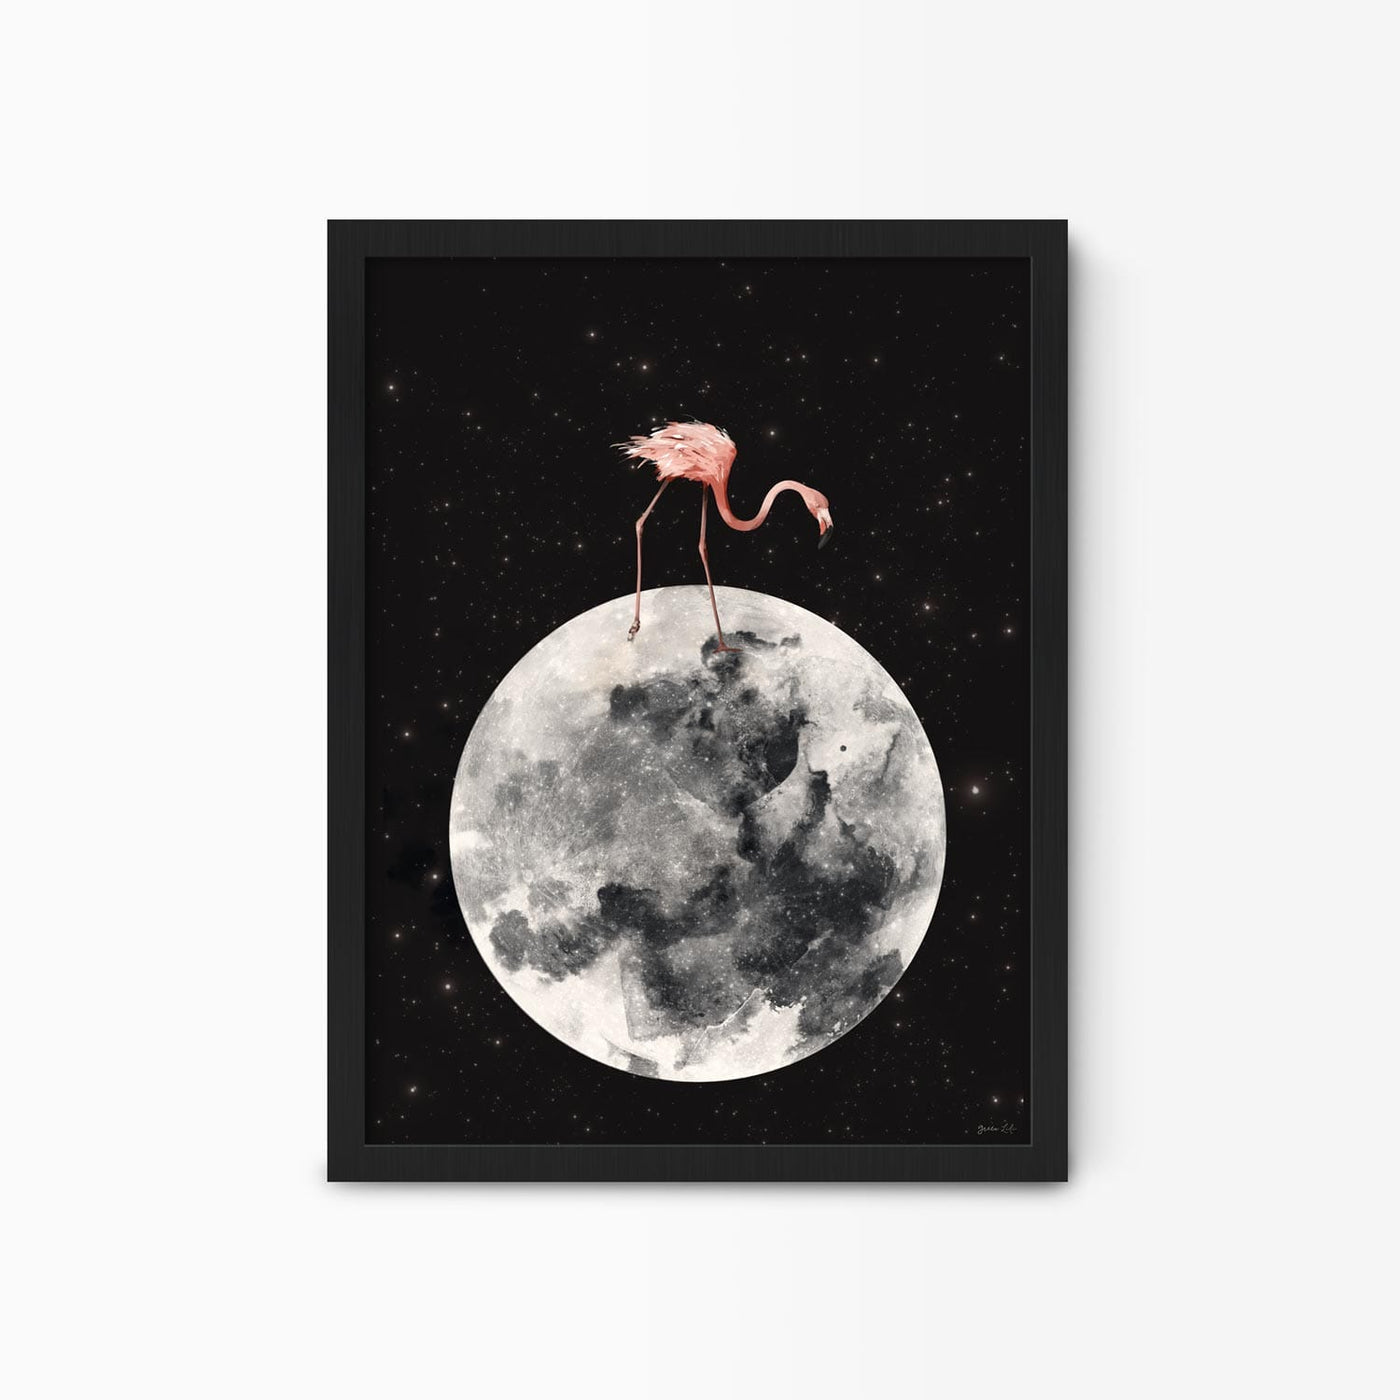 Green Lili 30x40cm (12x16") / Black Frame Flamingo On The Moon Print